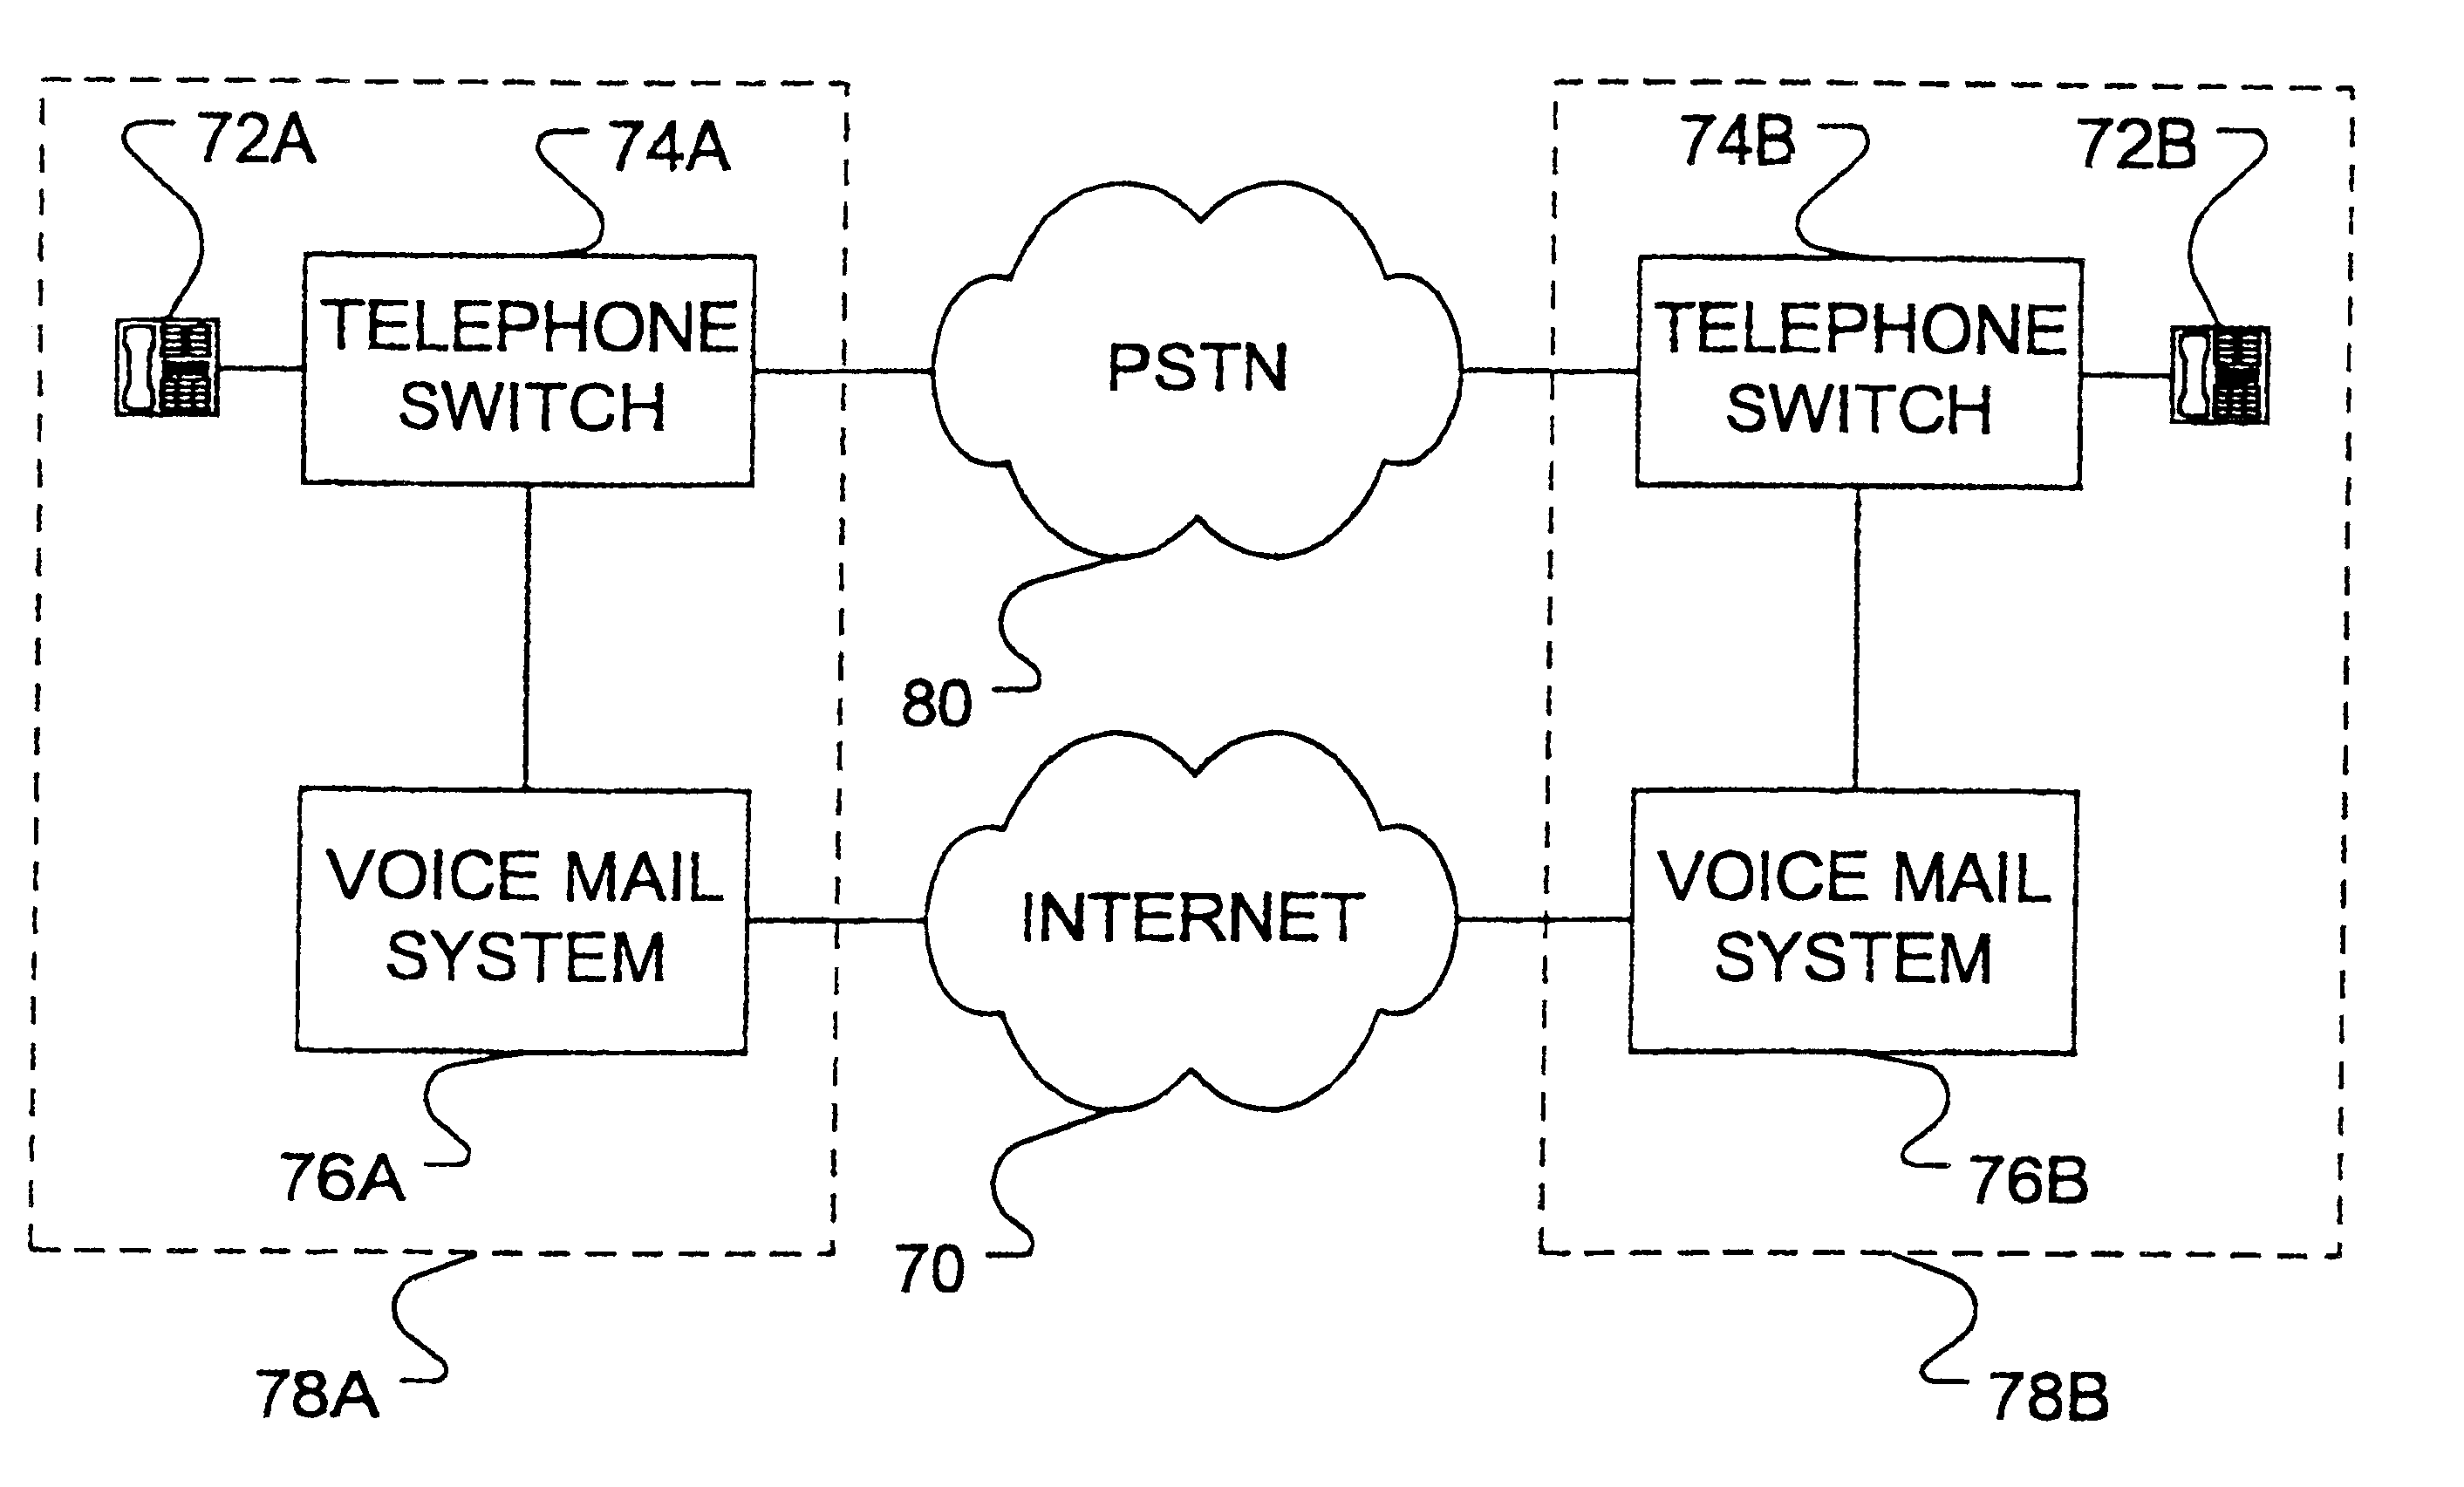 Message transfer system